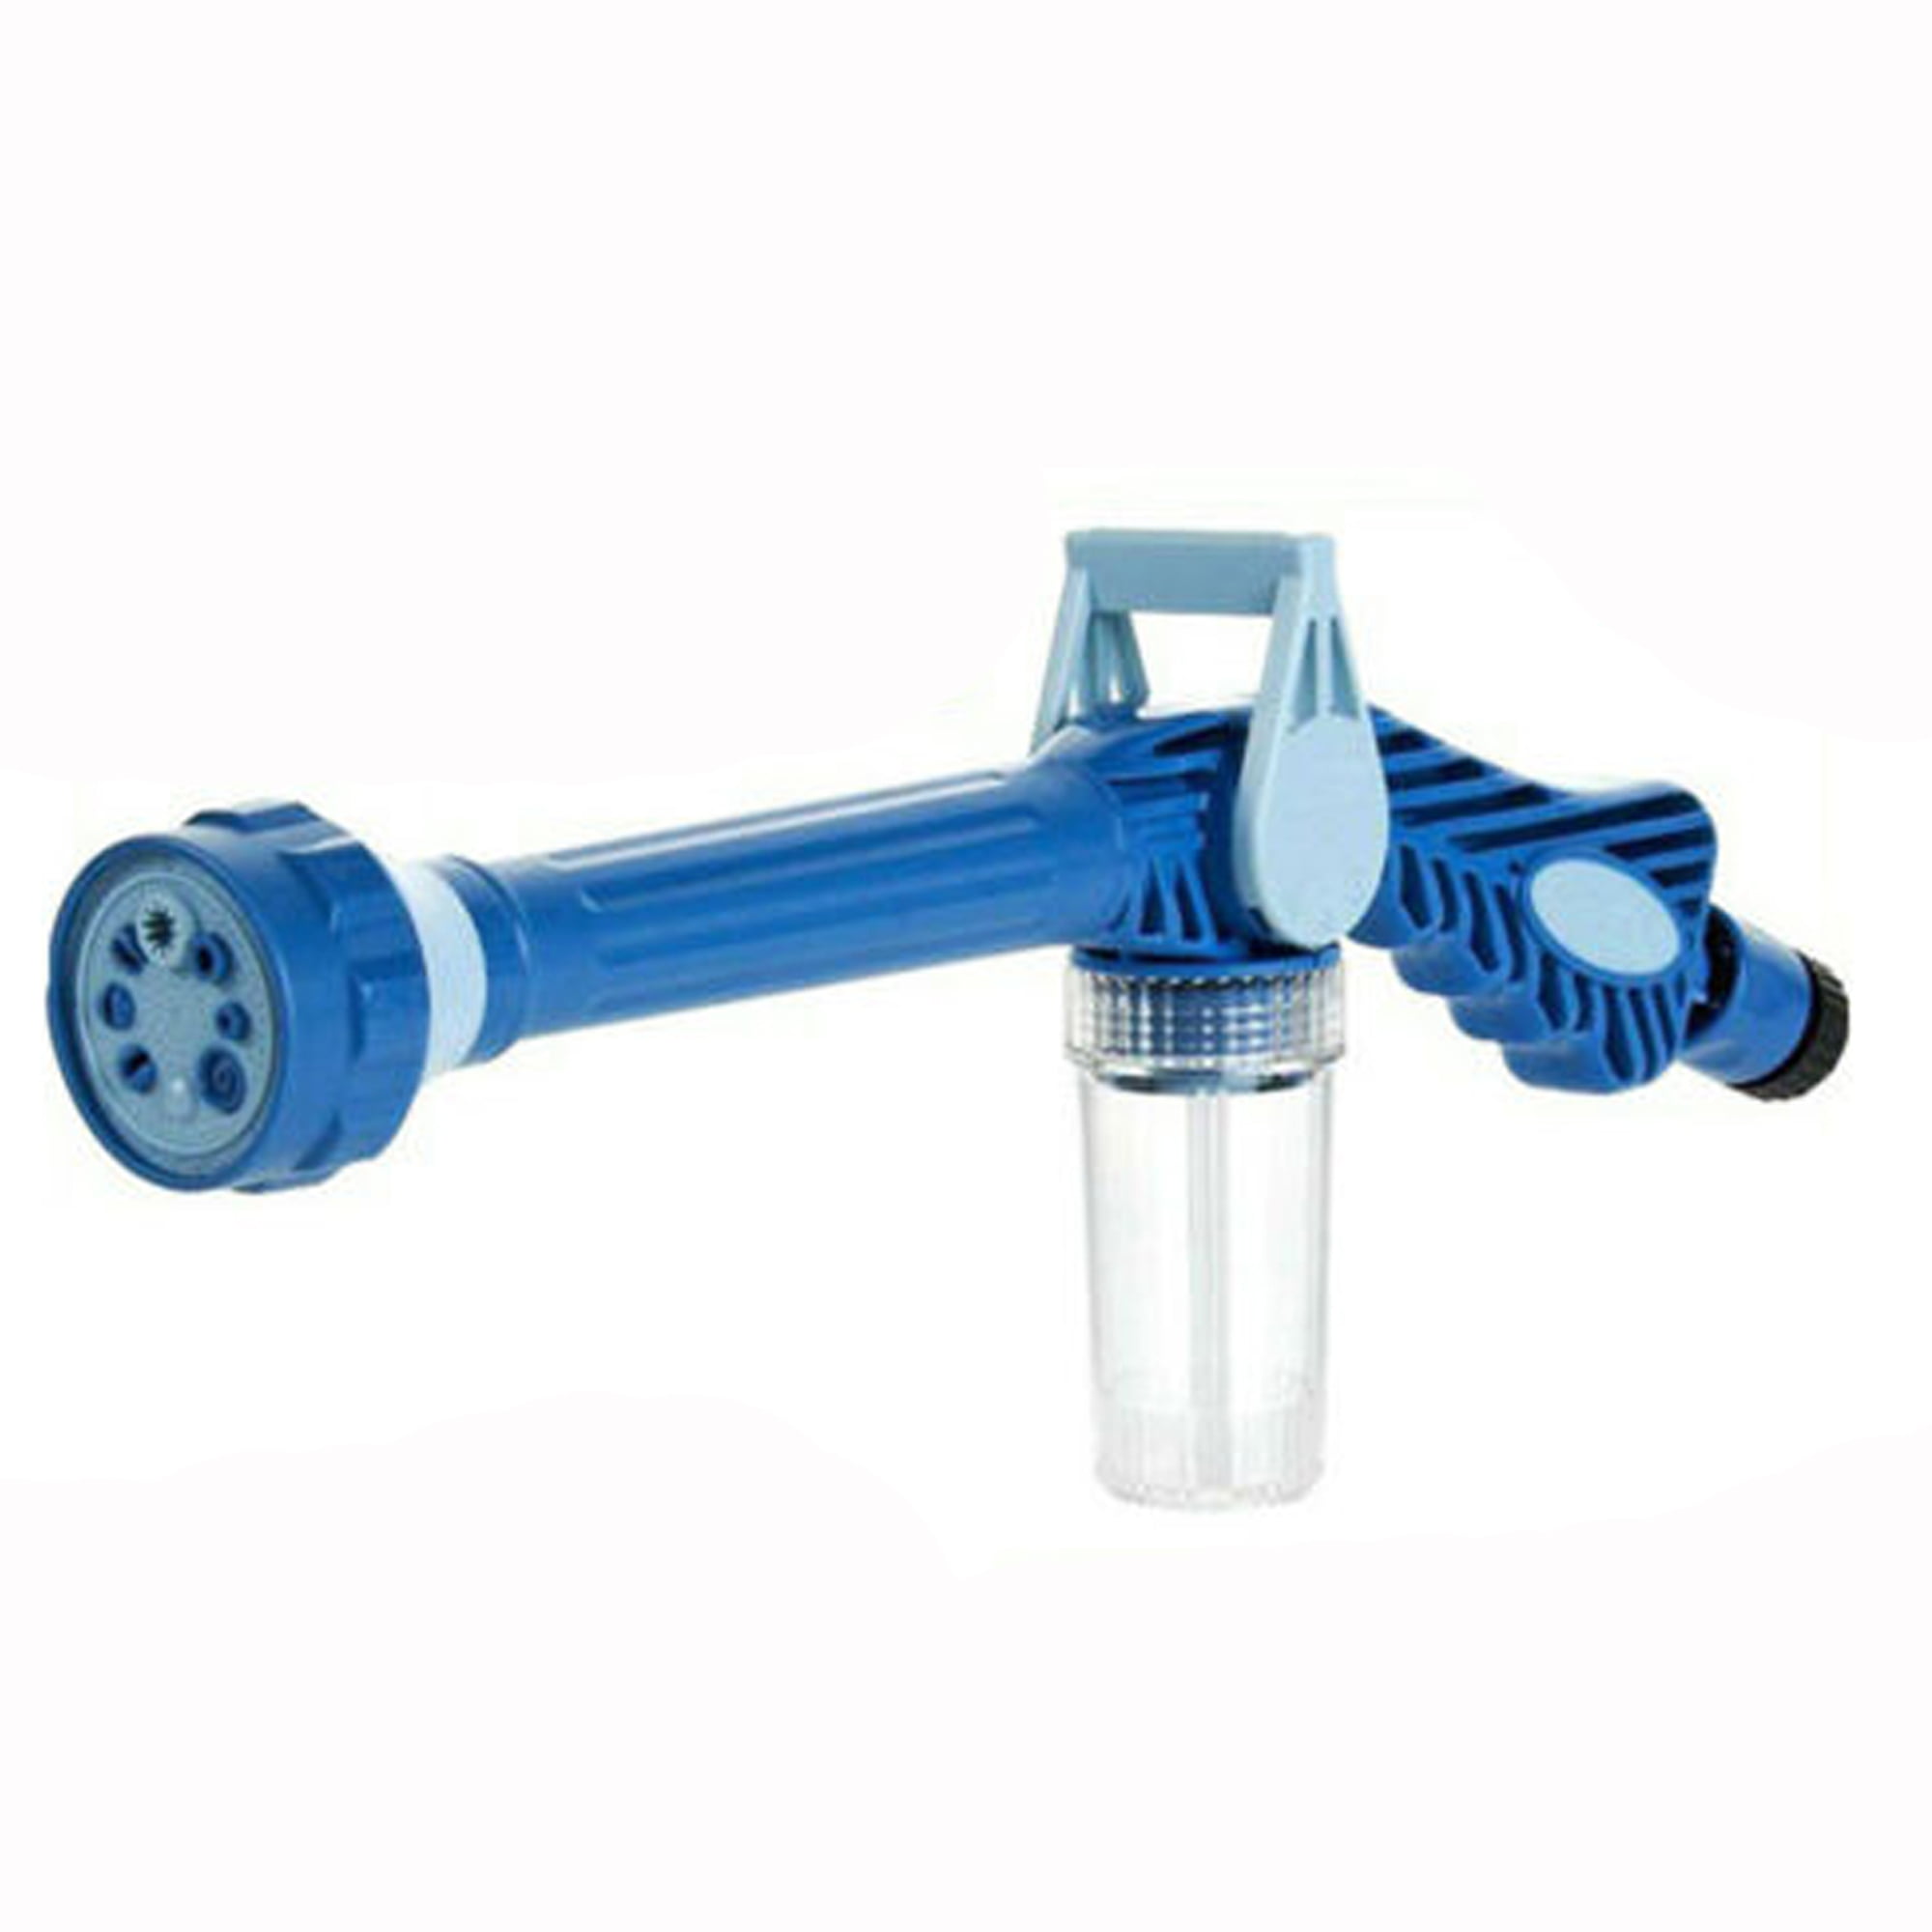 8 in 1 Multifunctional Ez Jet Water Soap Cannon Dispenser Nozzle Spray Clean Gun